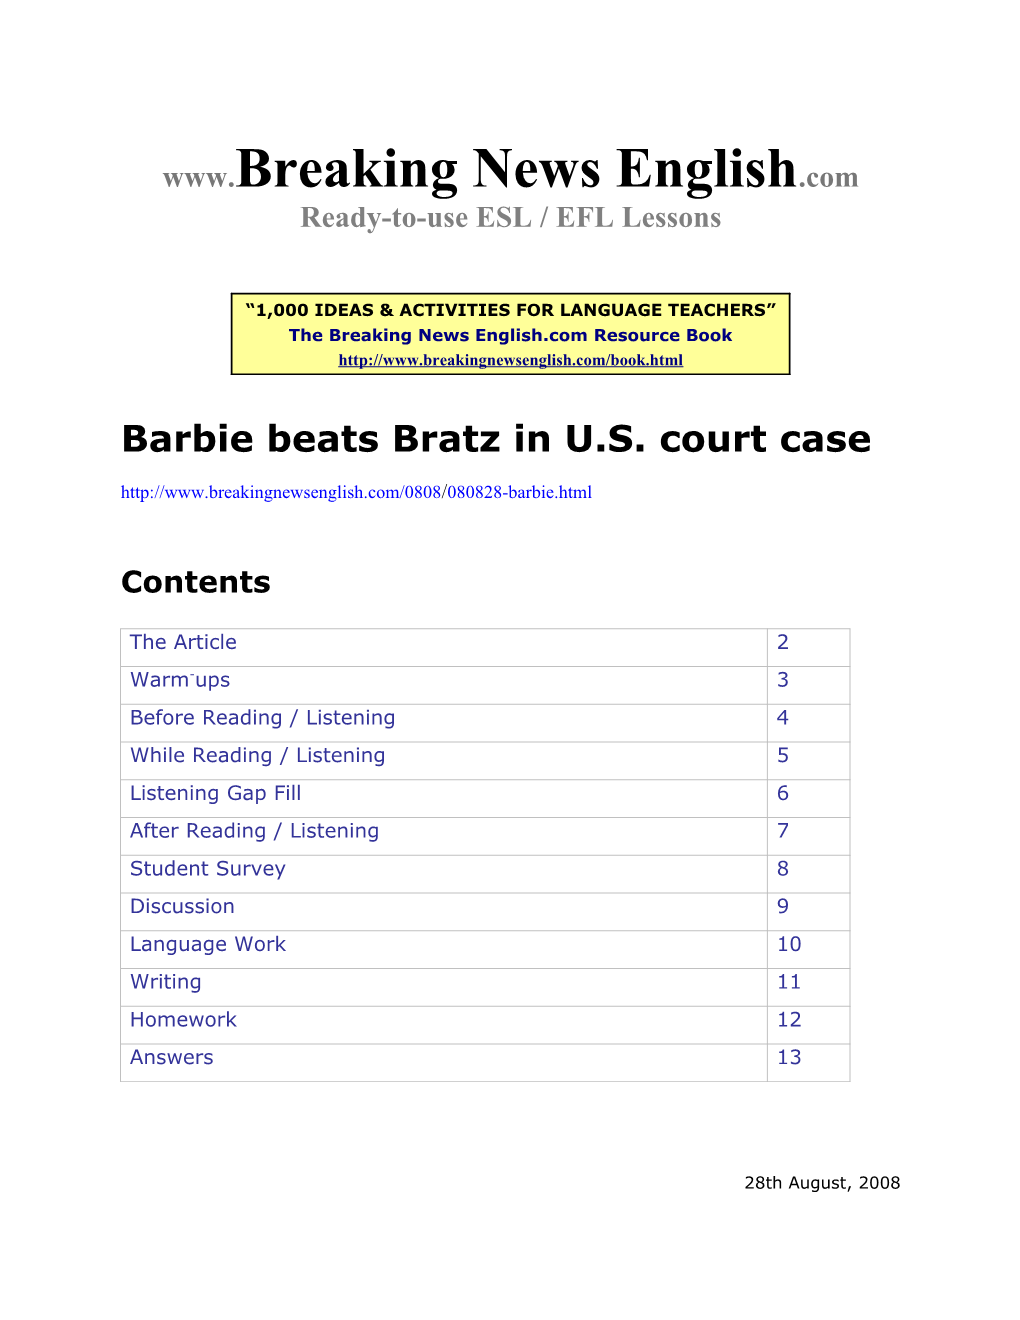 ESL Lesson: Barbie Beats Bratz in U.S. Court Case